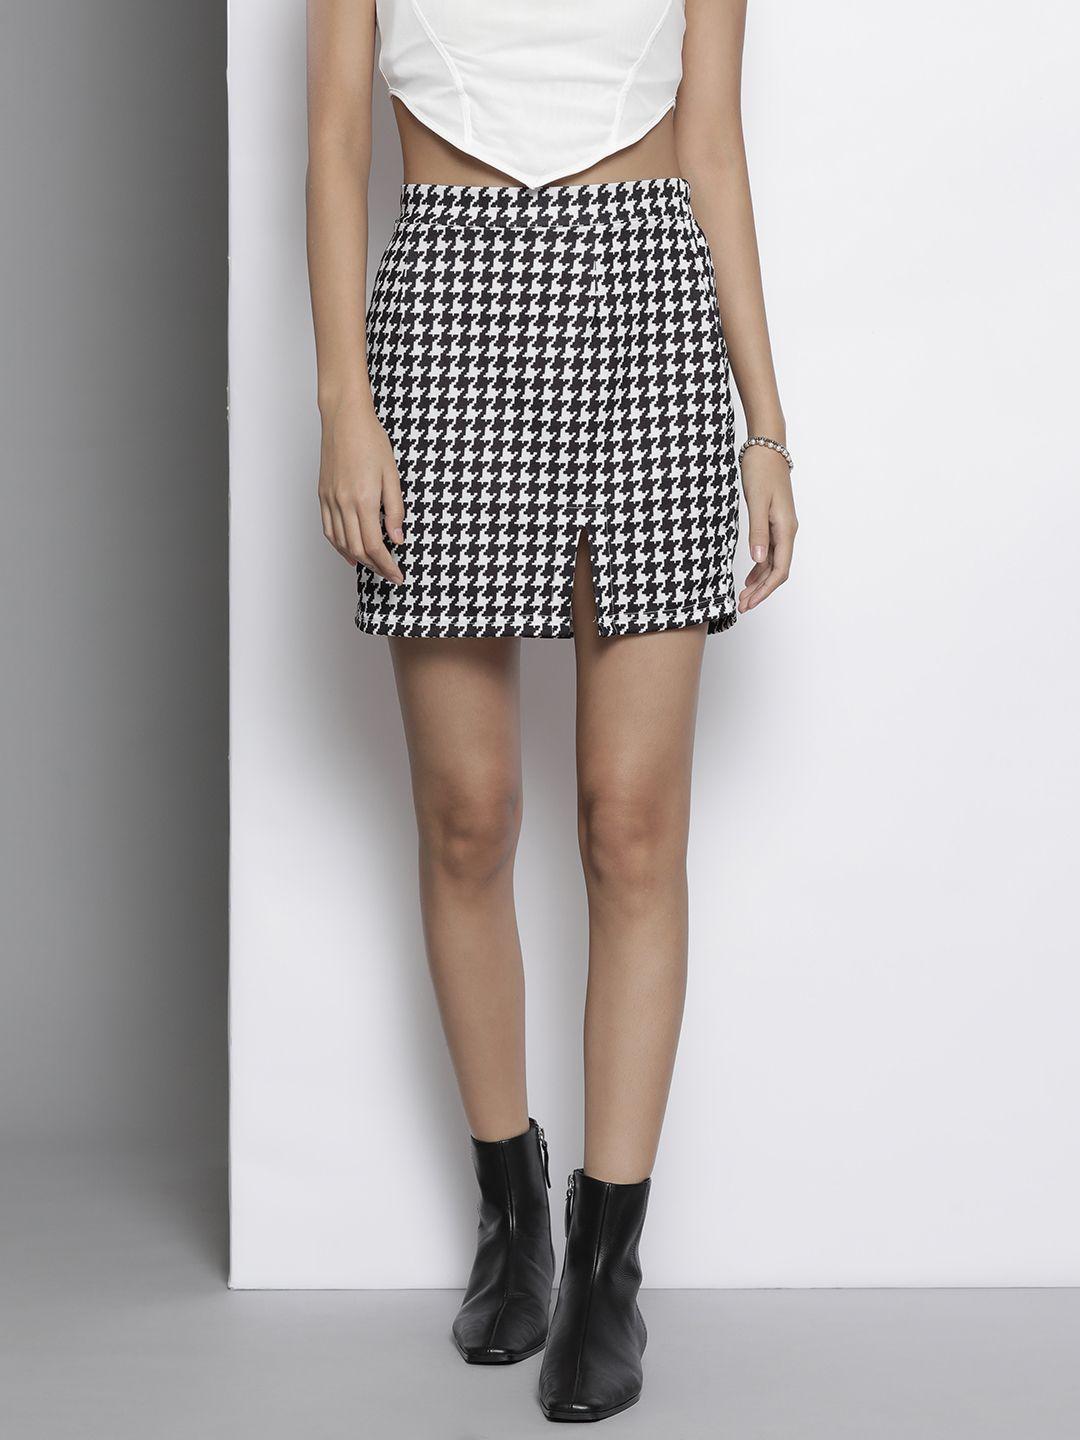 sassafras black & white geometrical knit mini skirt